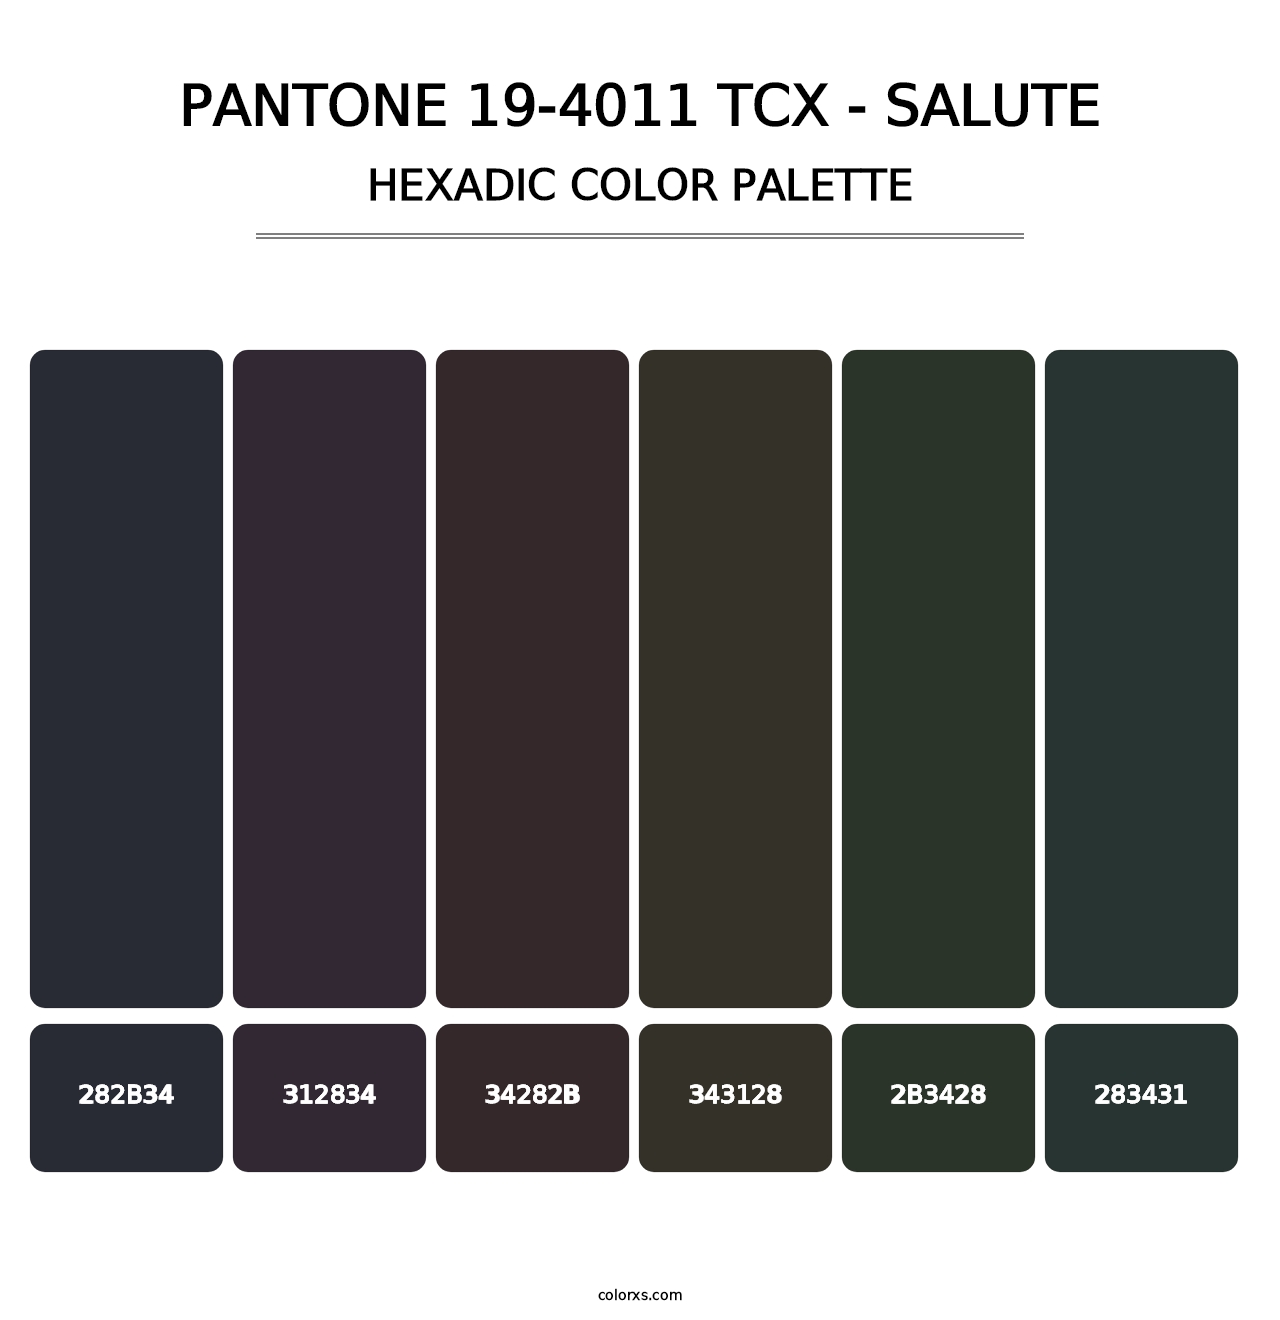 PANTONE 19-4011 TCX - Salute - Hexadic Color Palette